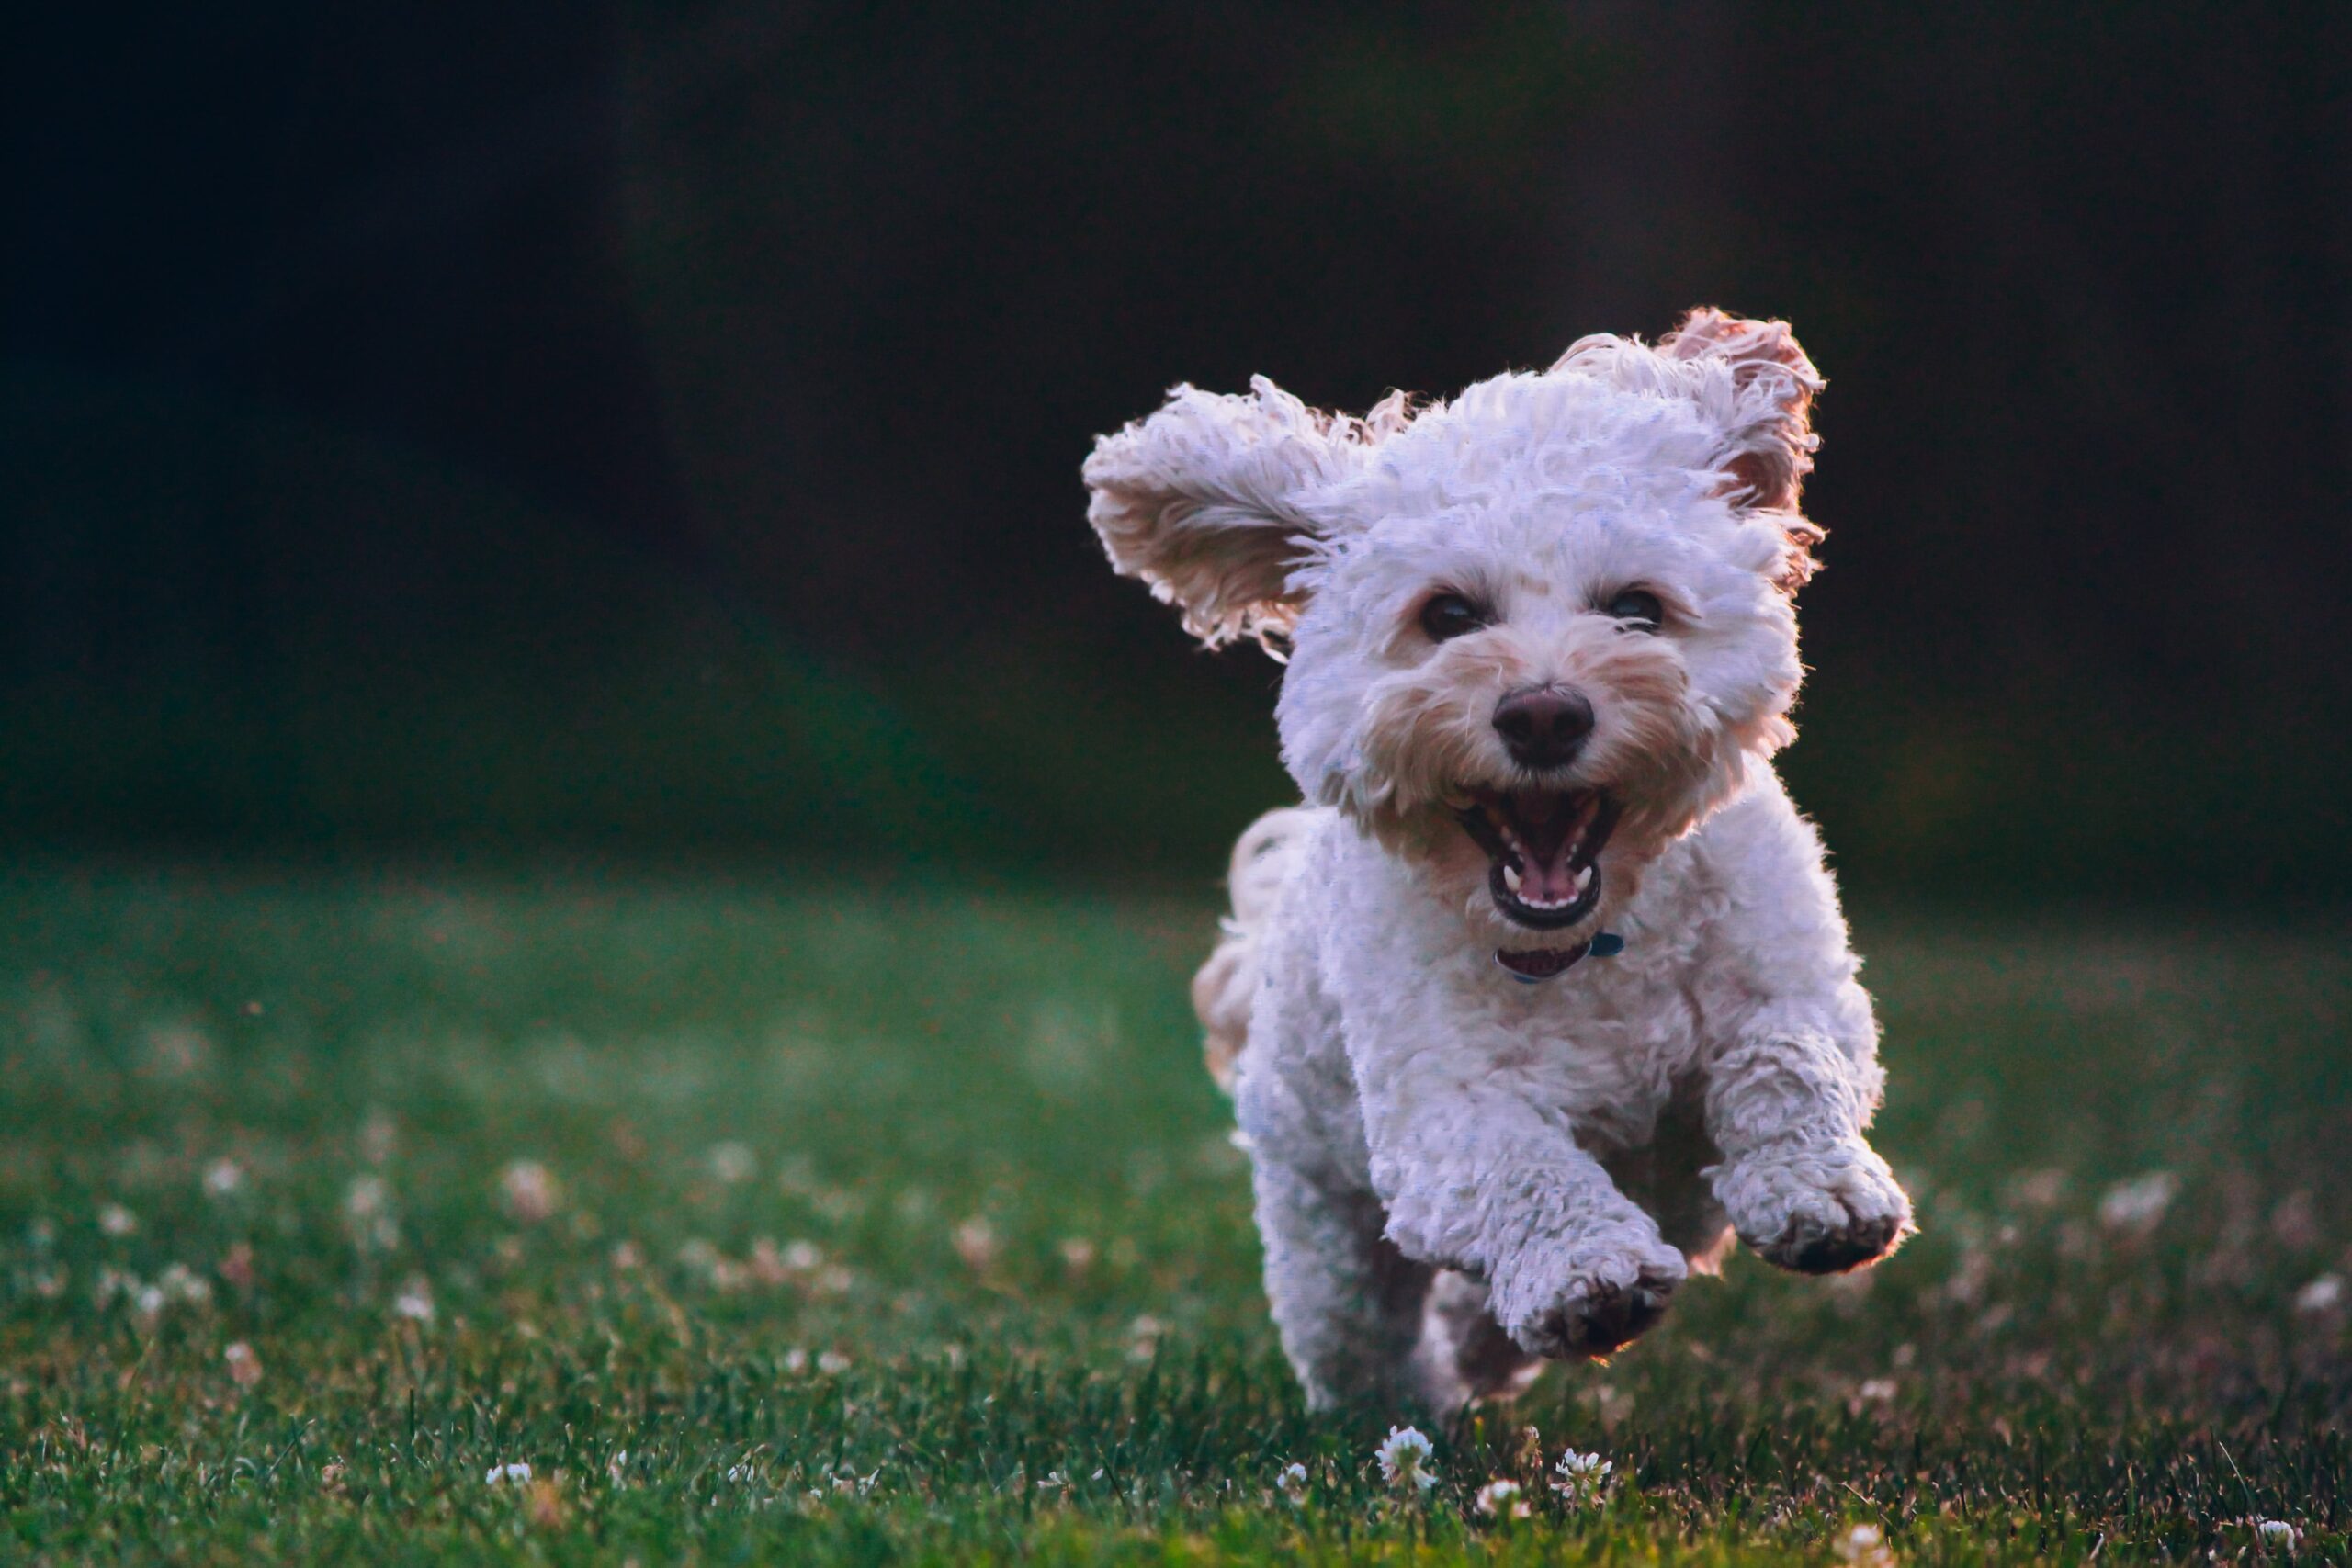 White poodle dog running through grass